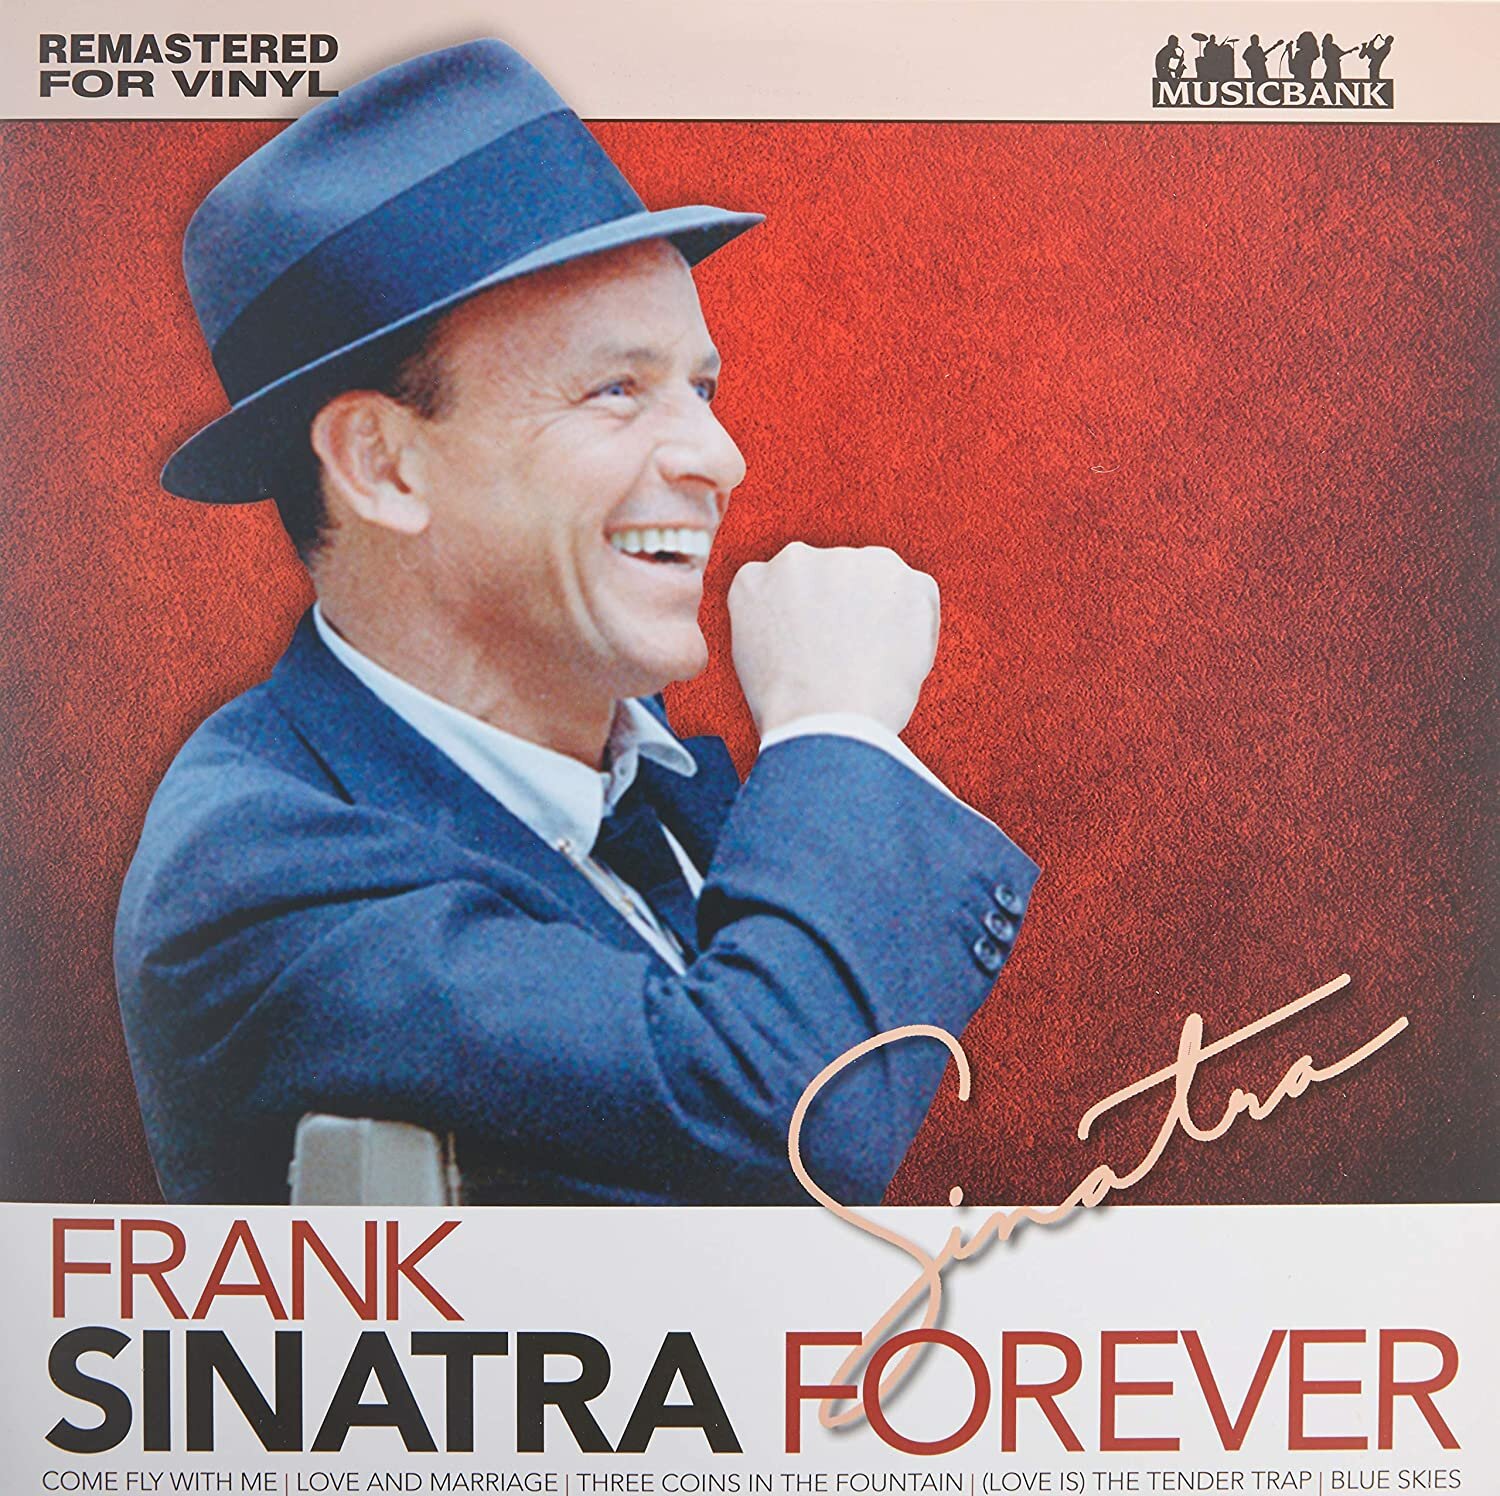 Sinatra Frank "Виниловая пластинка Sinatra Frank Sinatra Forever"